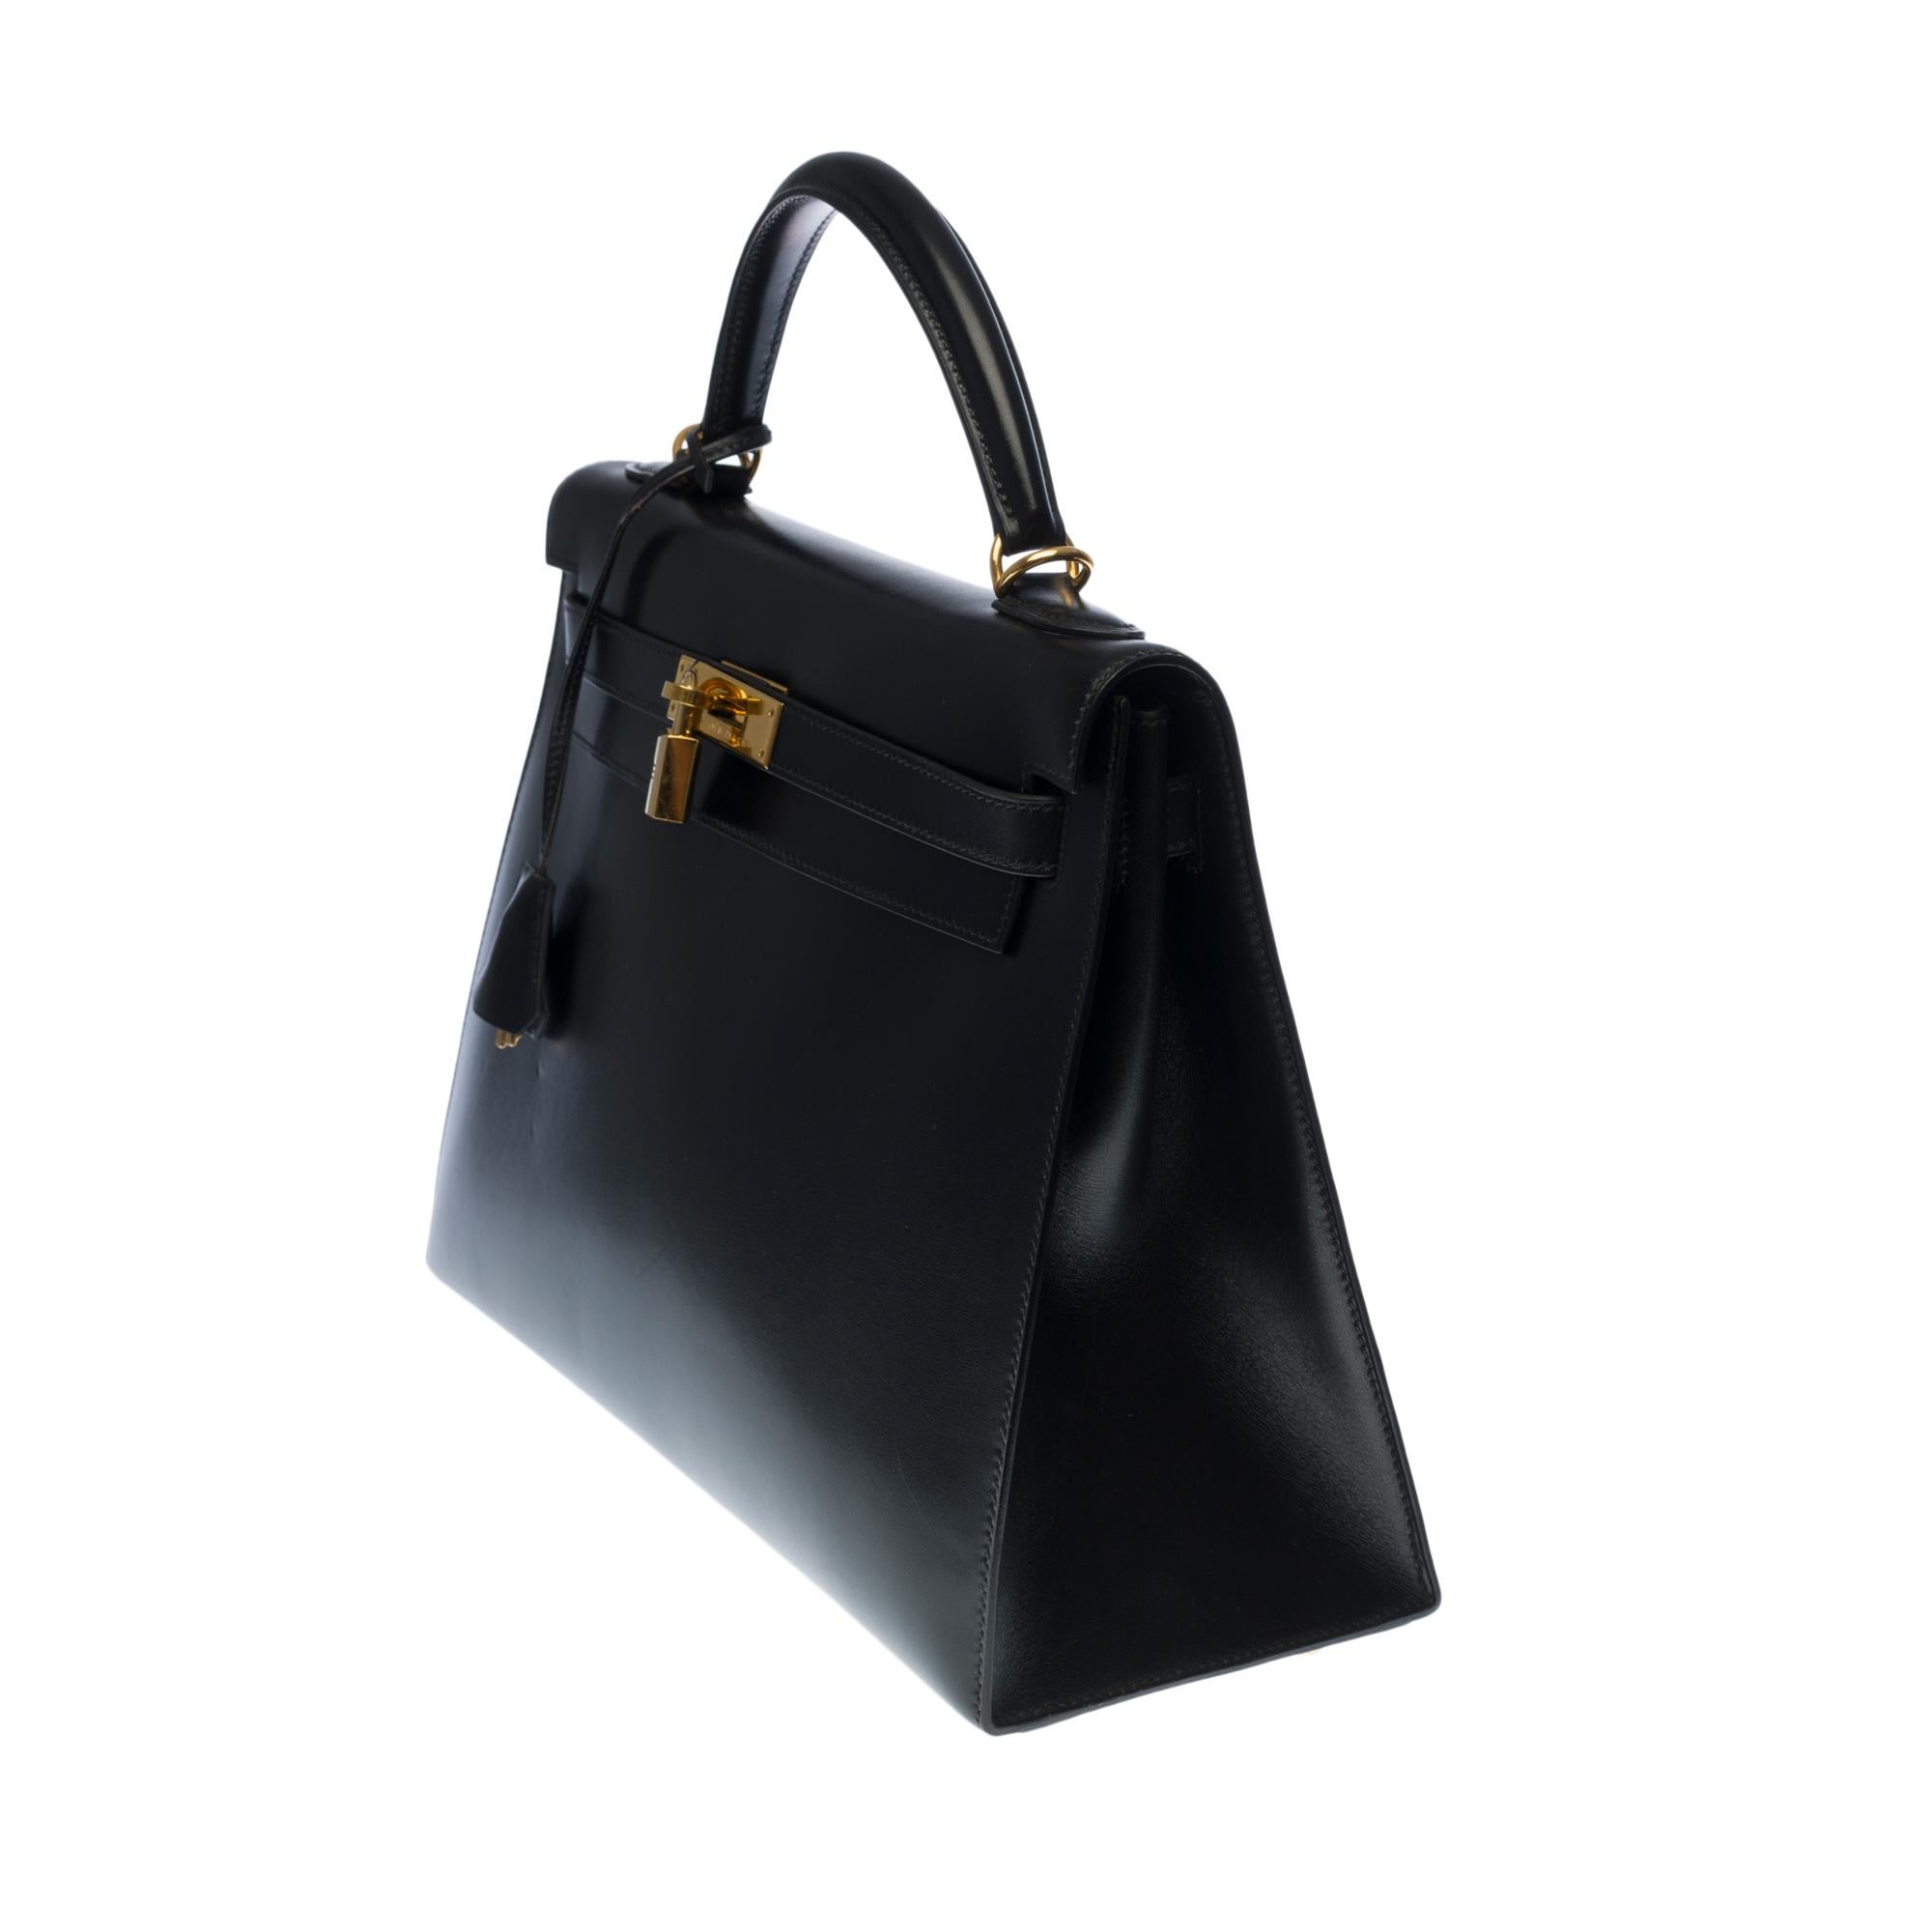 Black Hermès Kelly 32 handbag with strap in black box calfskin leather, GHW